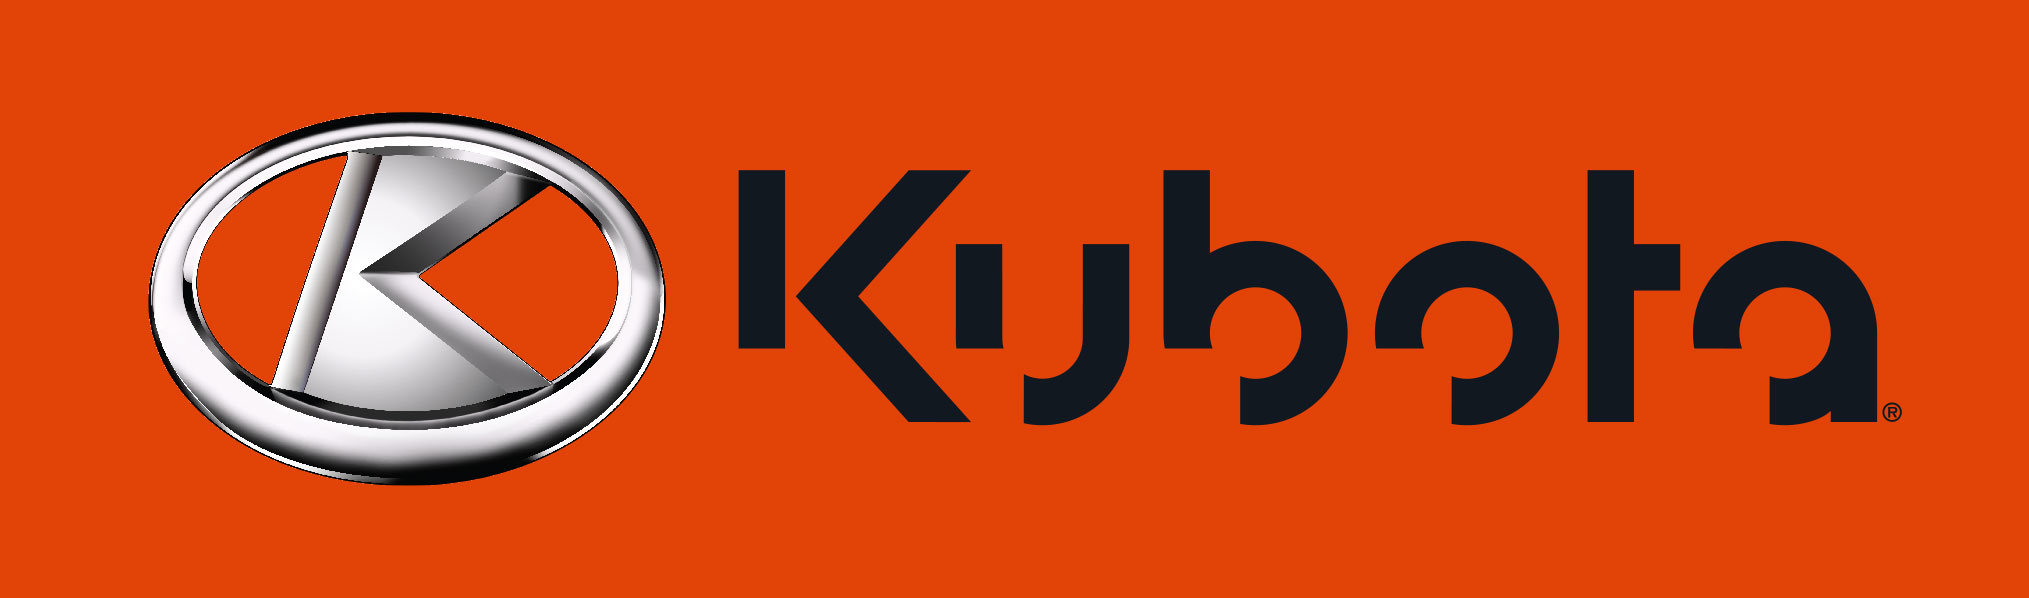 kubota_logo wide